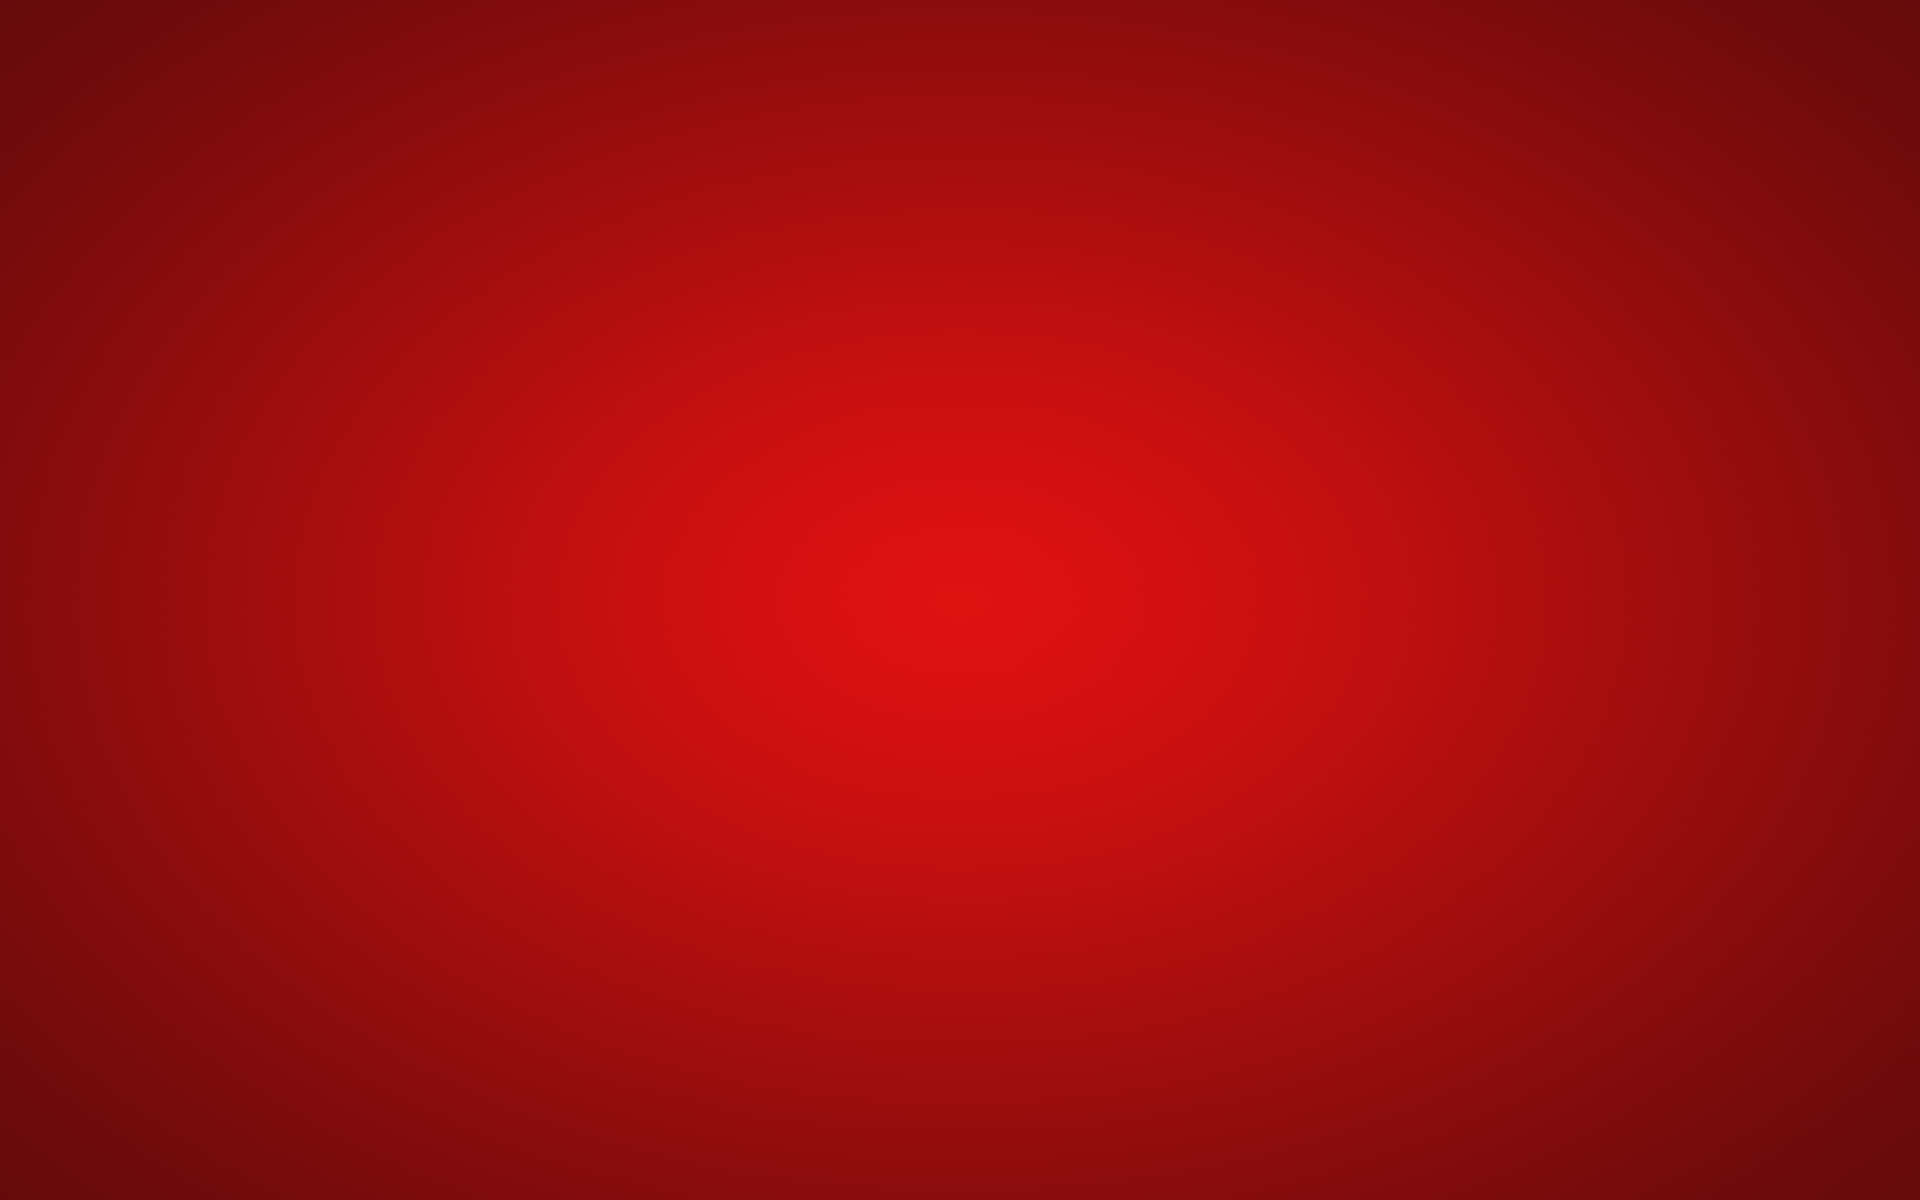 Light Red Background With Dark Edges Background